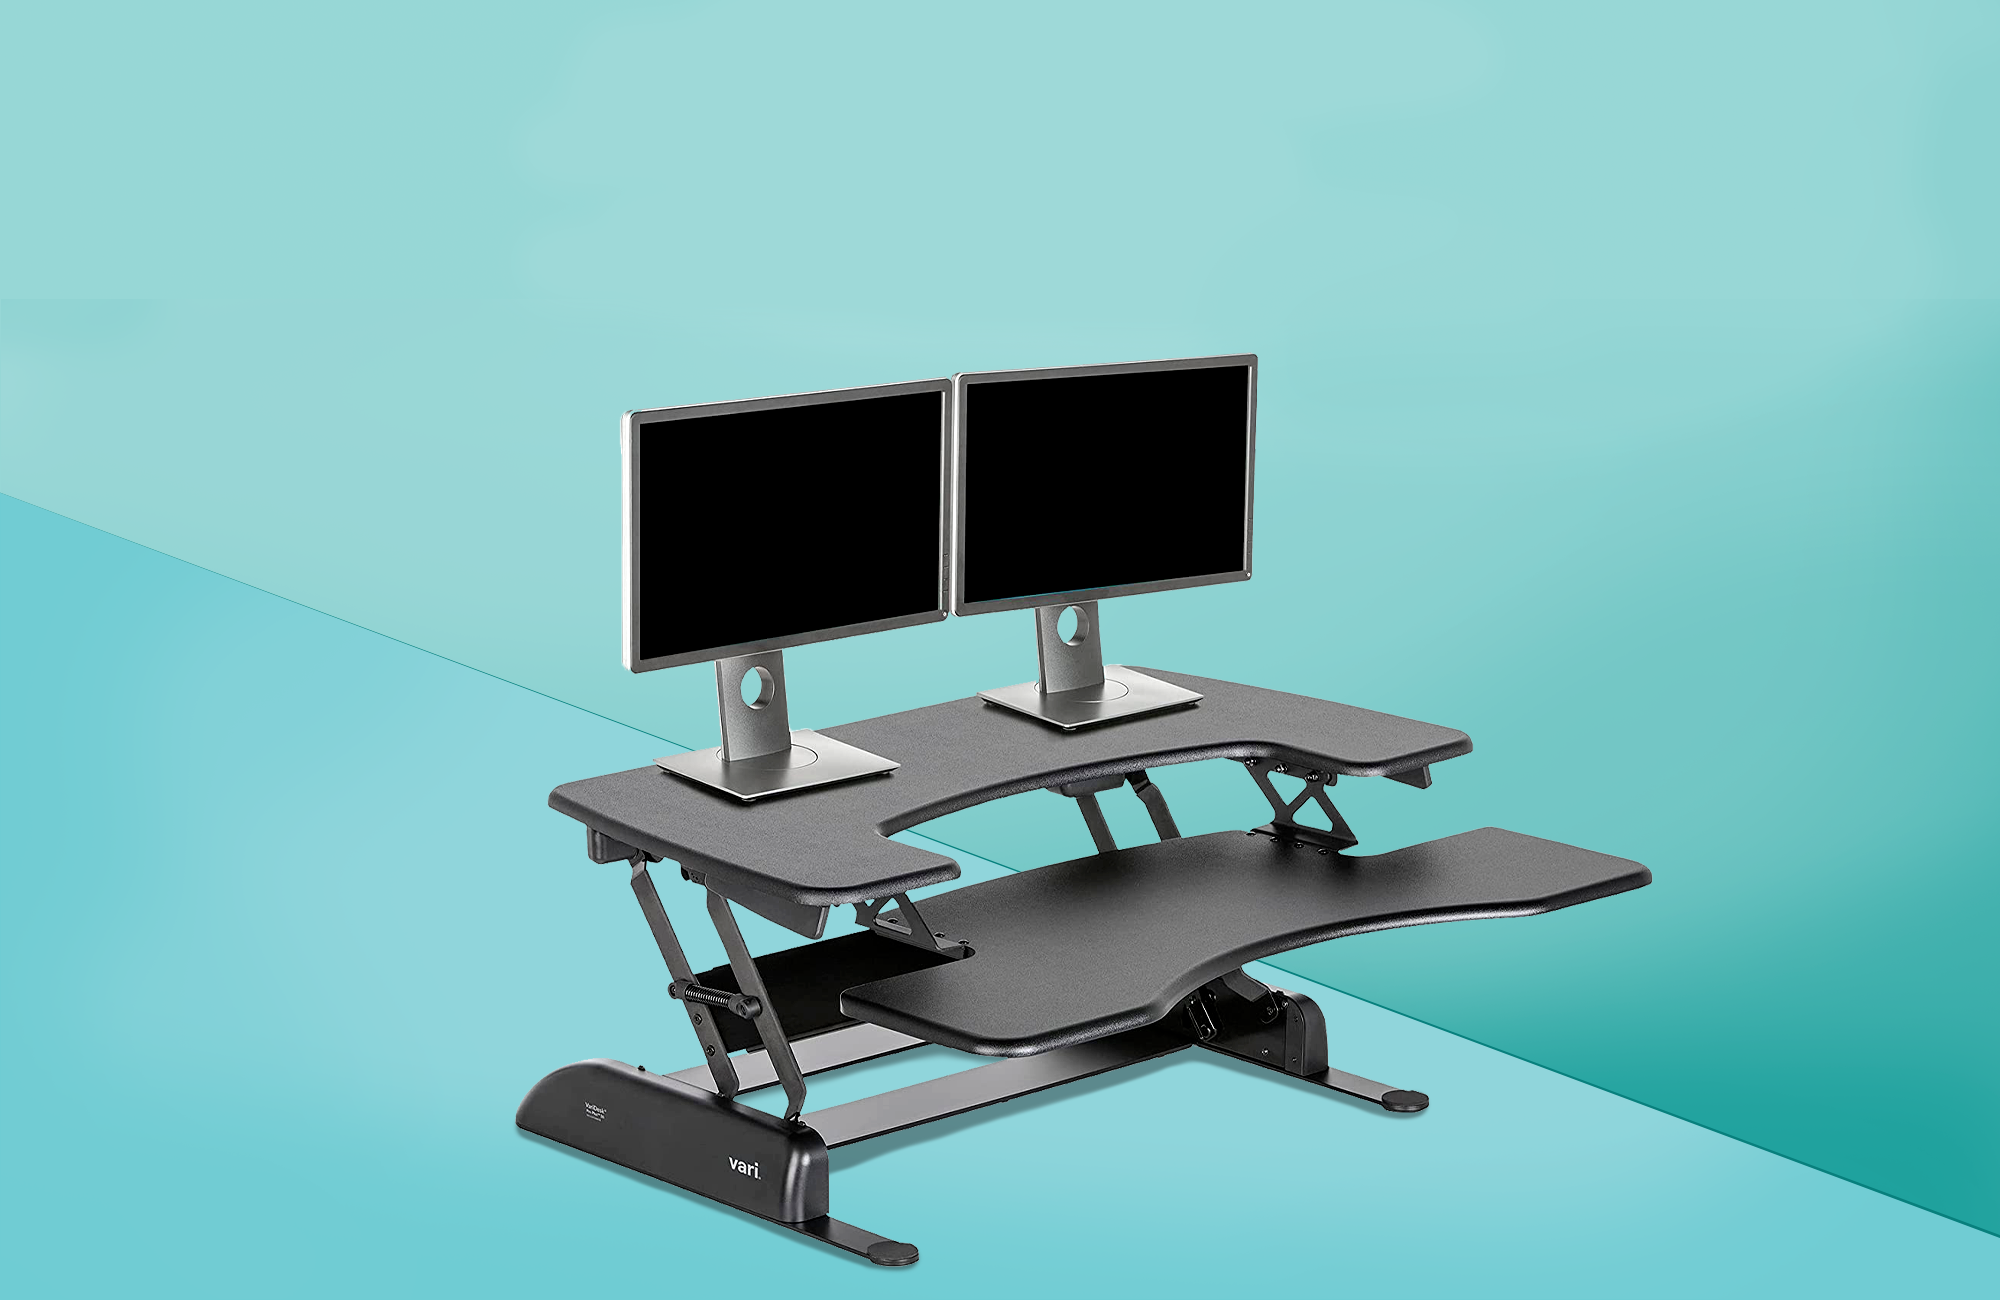 Small Standing Desk Converter for Laptops Single Monitors sit